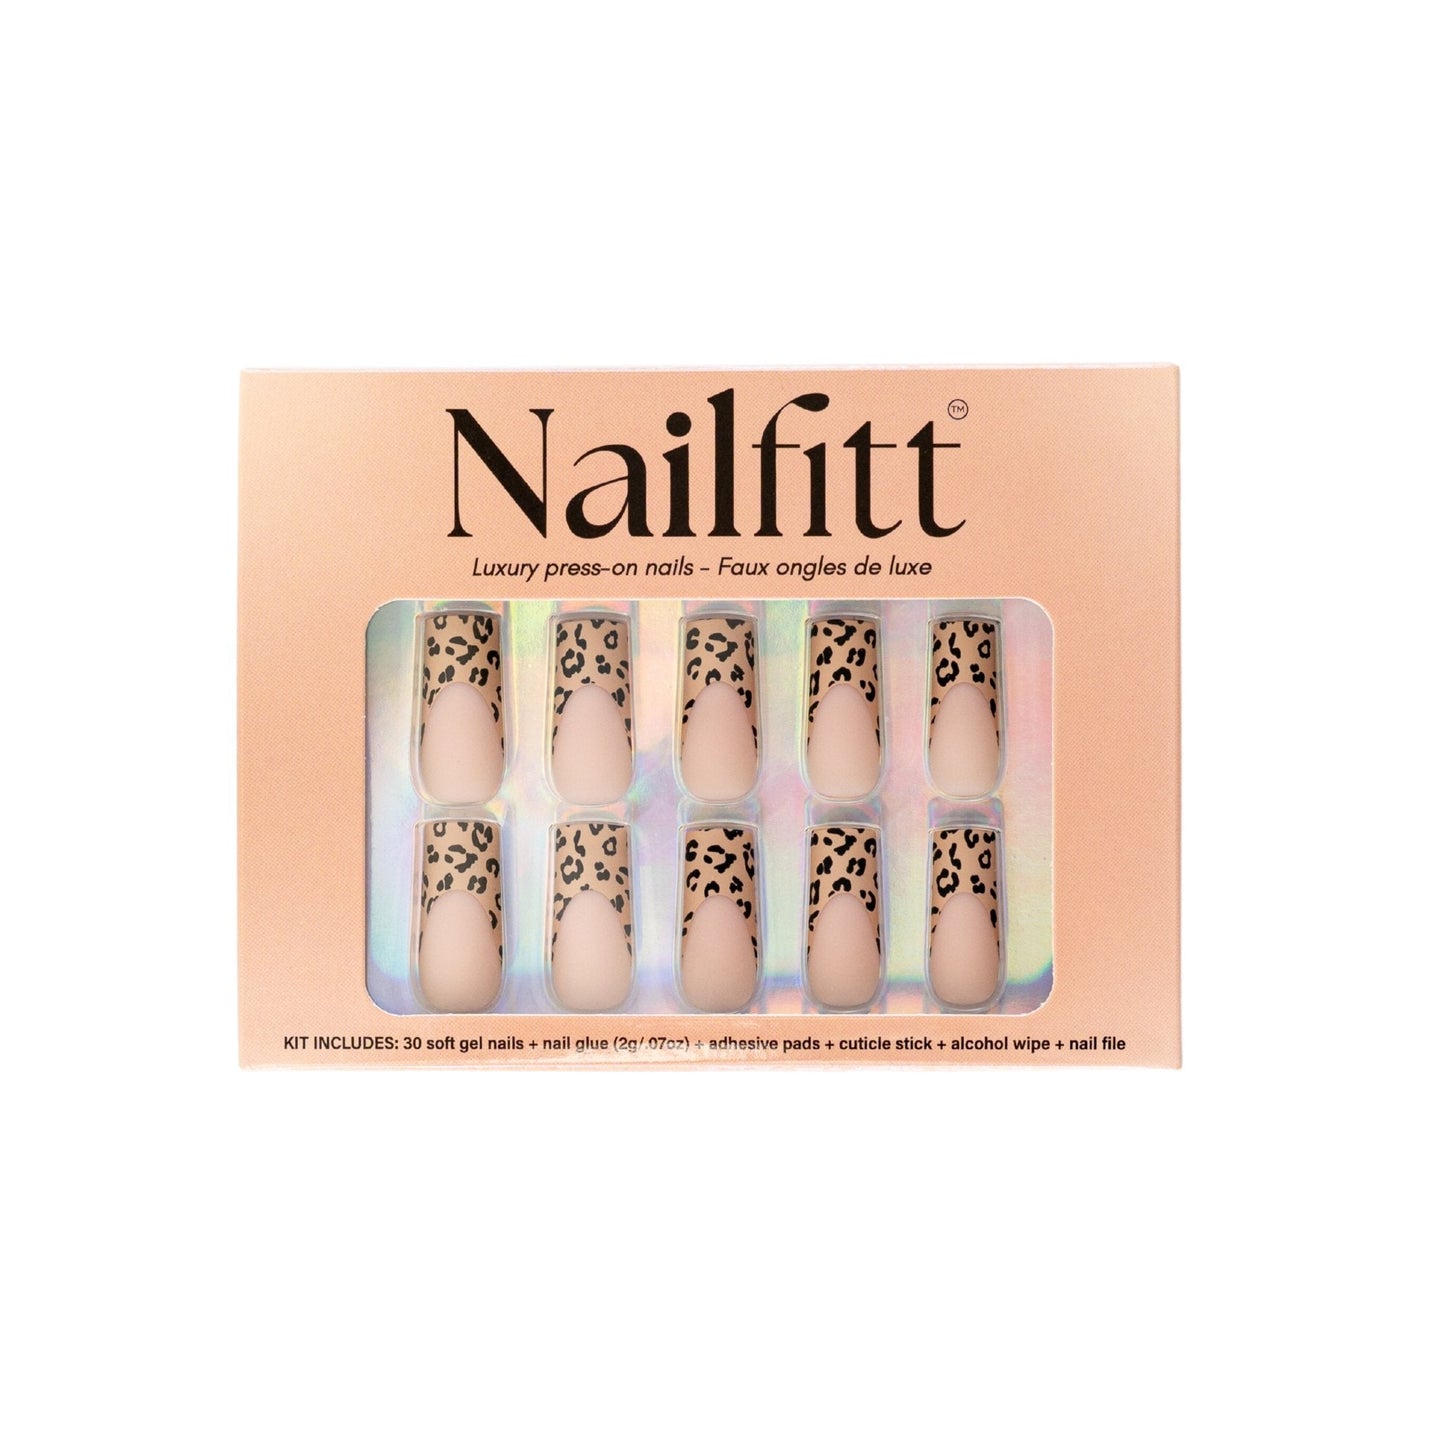 Animal print - Nailfitt